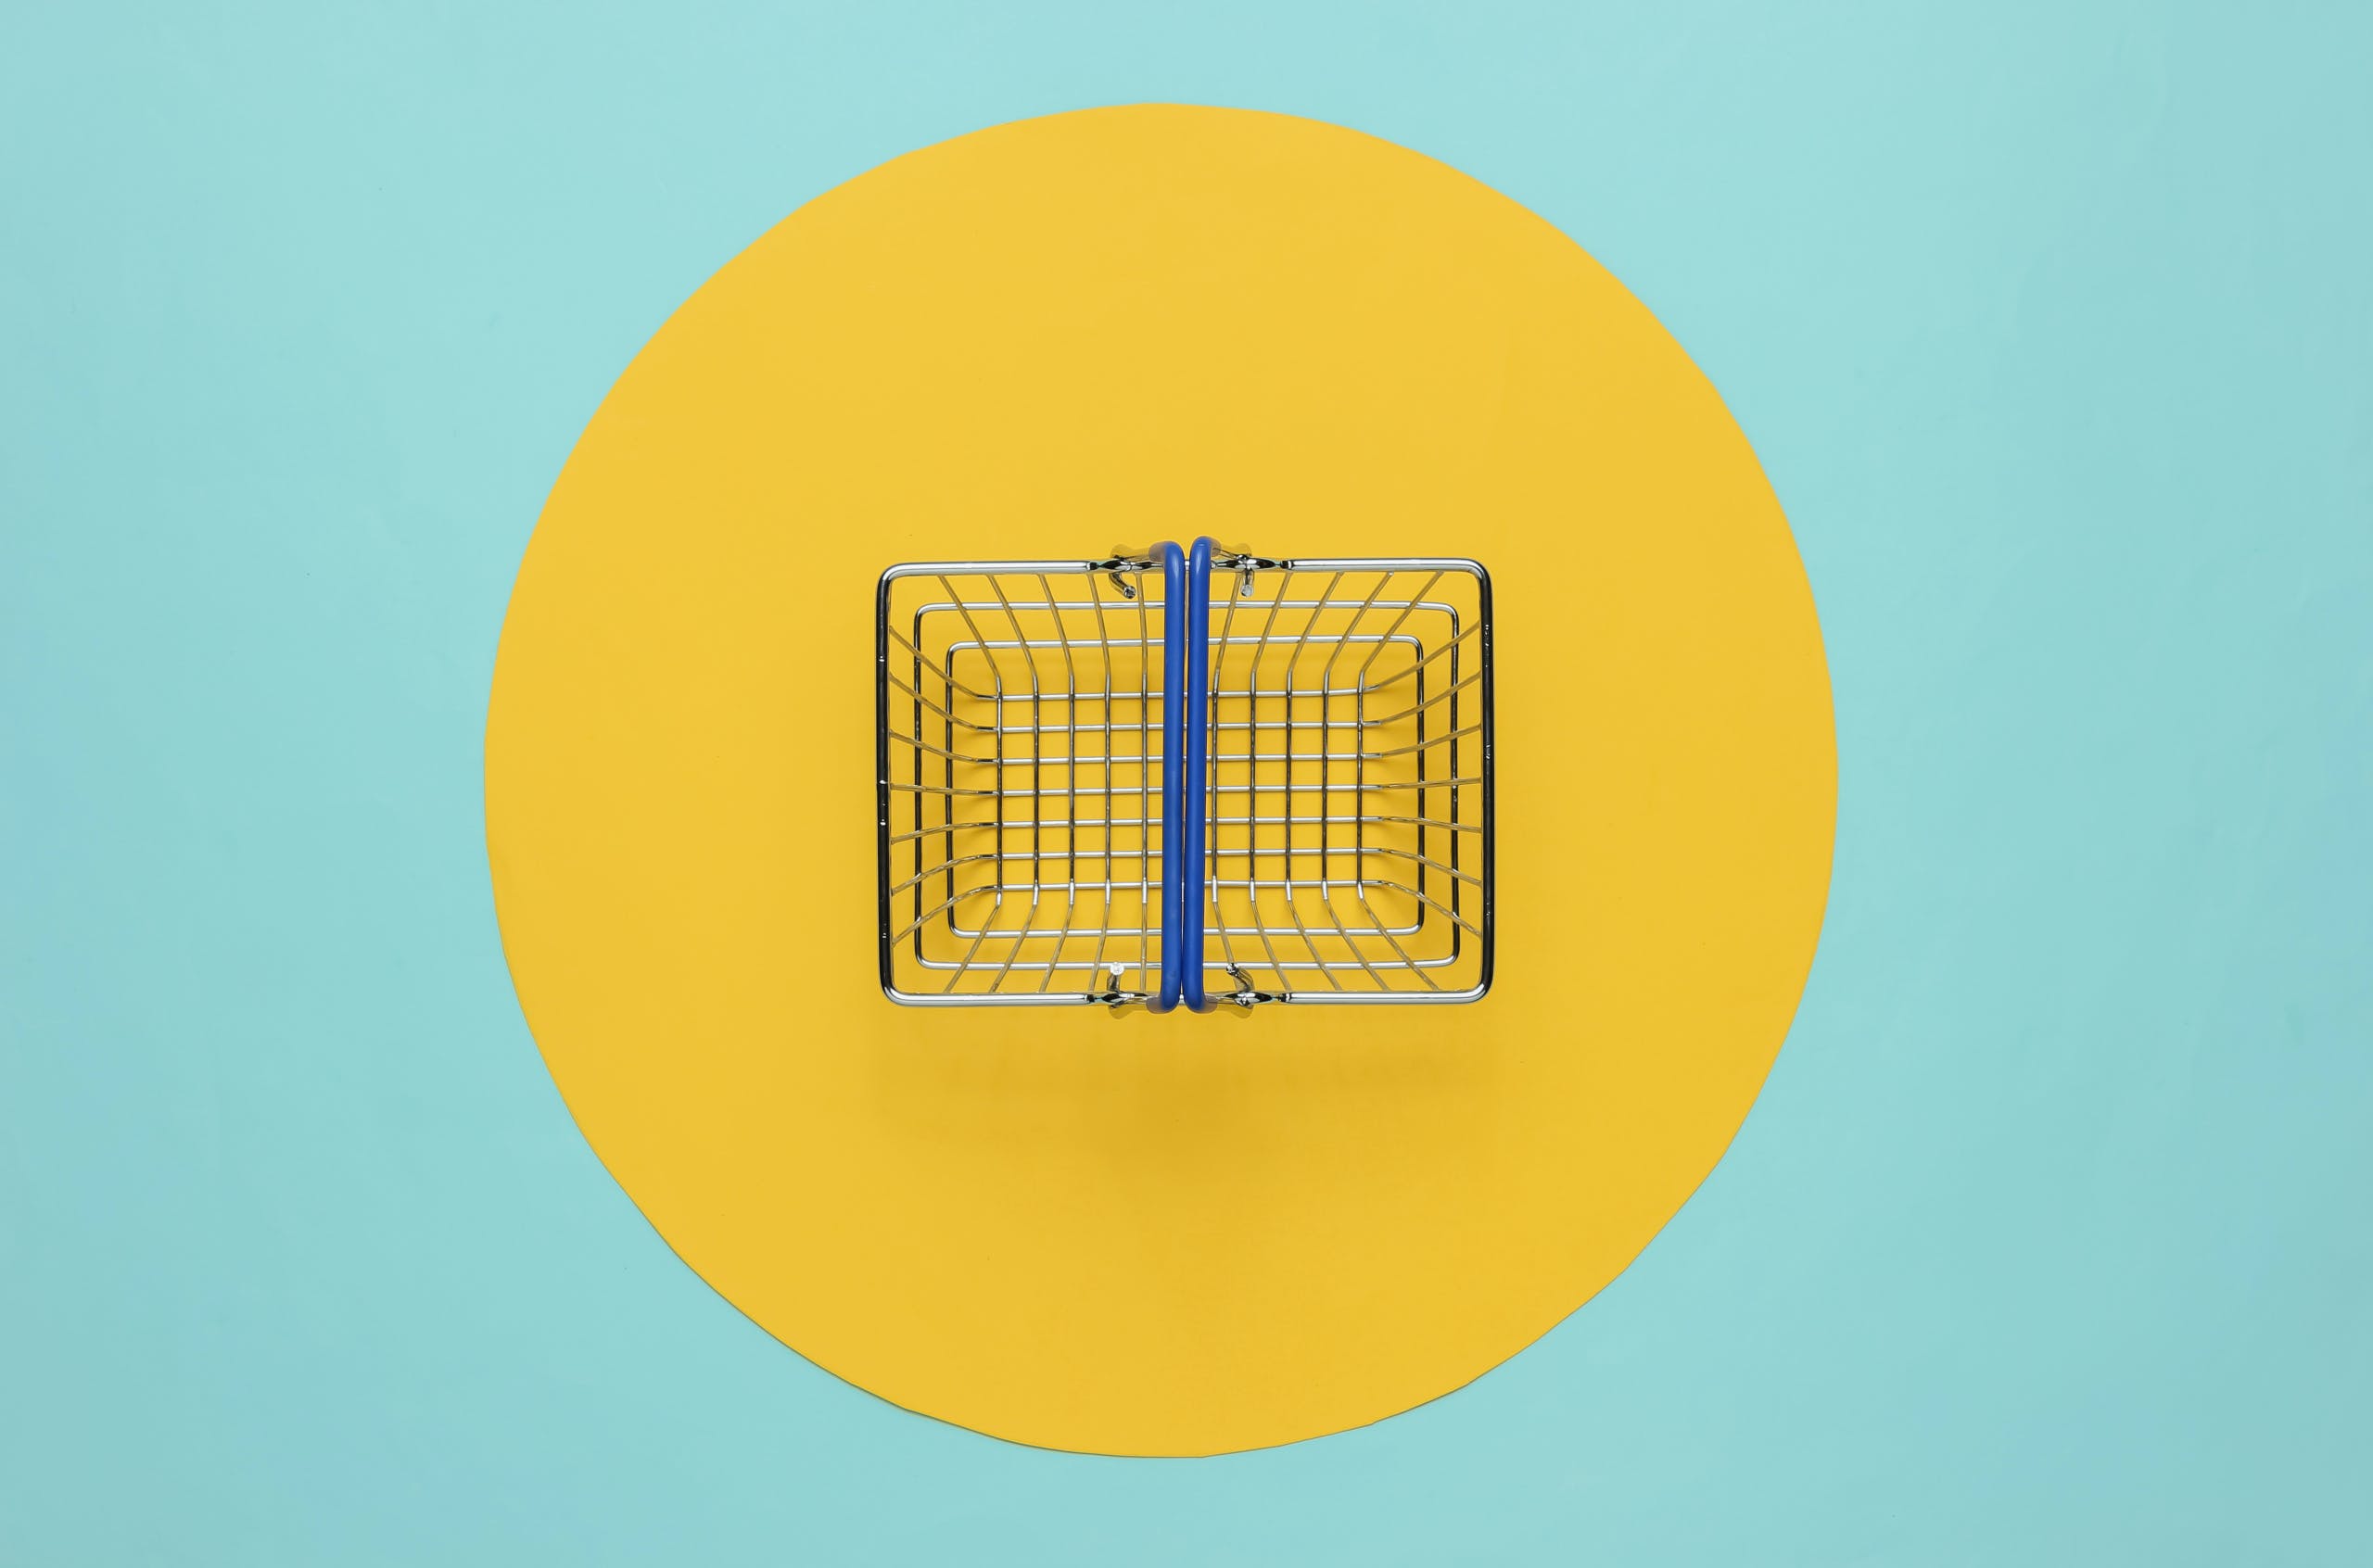 Mini-shopping-basket-on-blue-background-with-yellow-circle-scaled